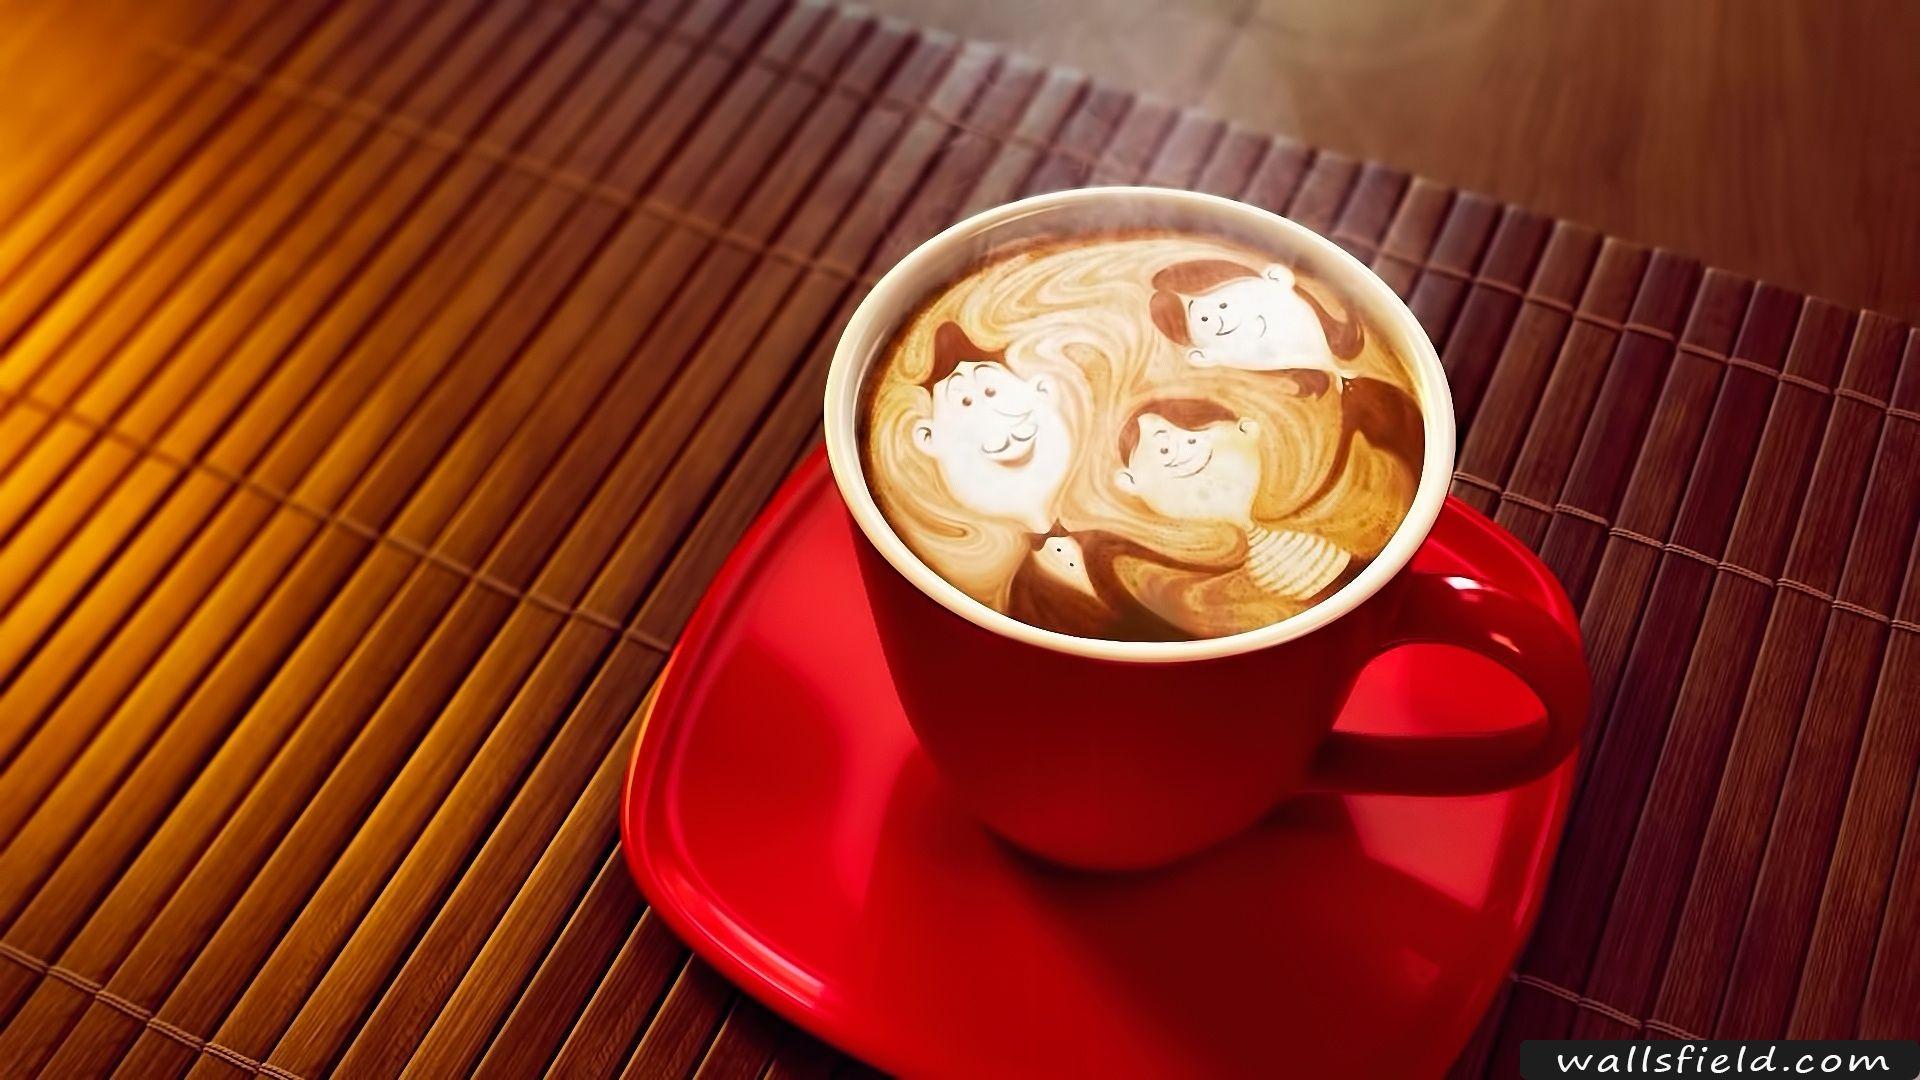 Coffee Cup For Winter. Coffee art, Coffee latte art, Cappuccino art